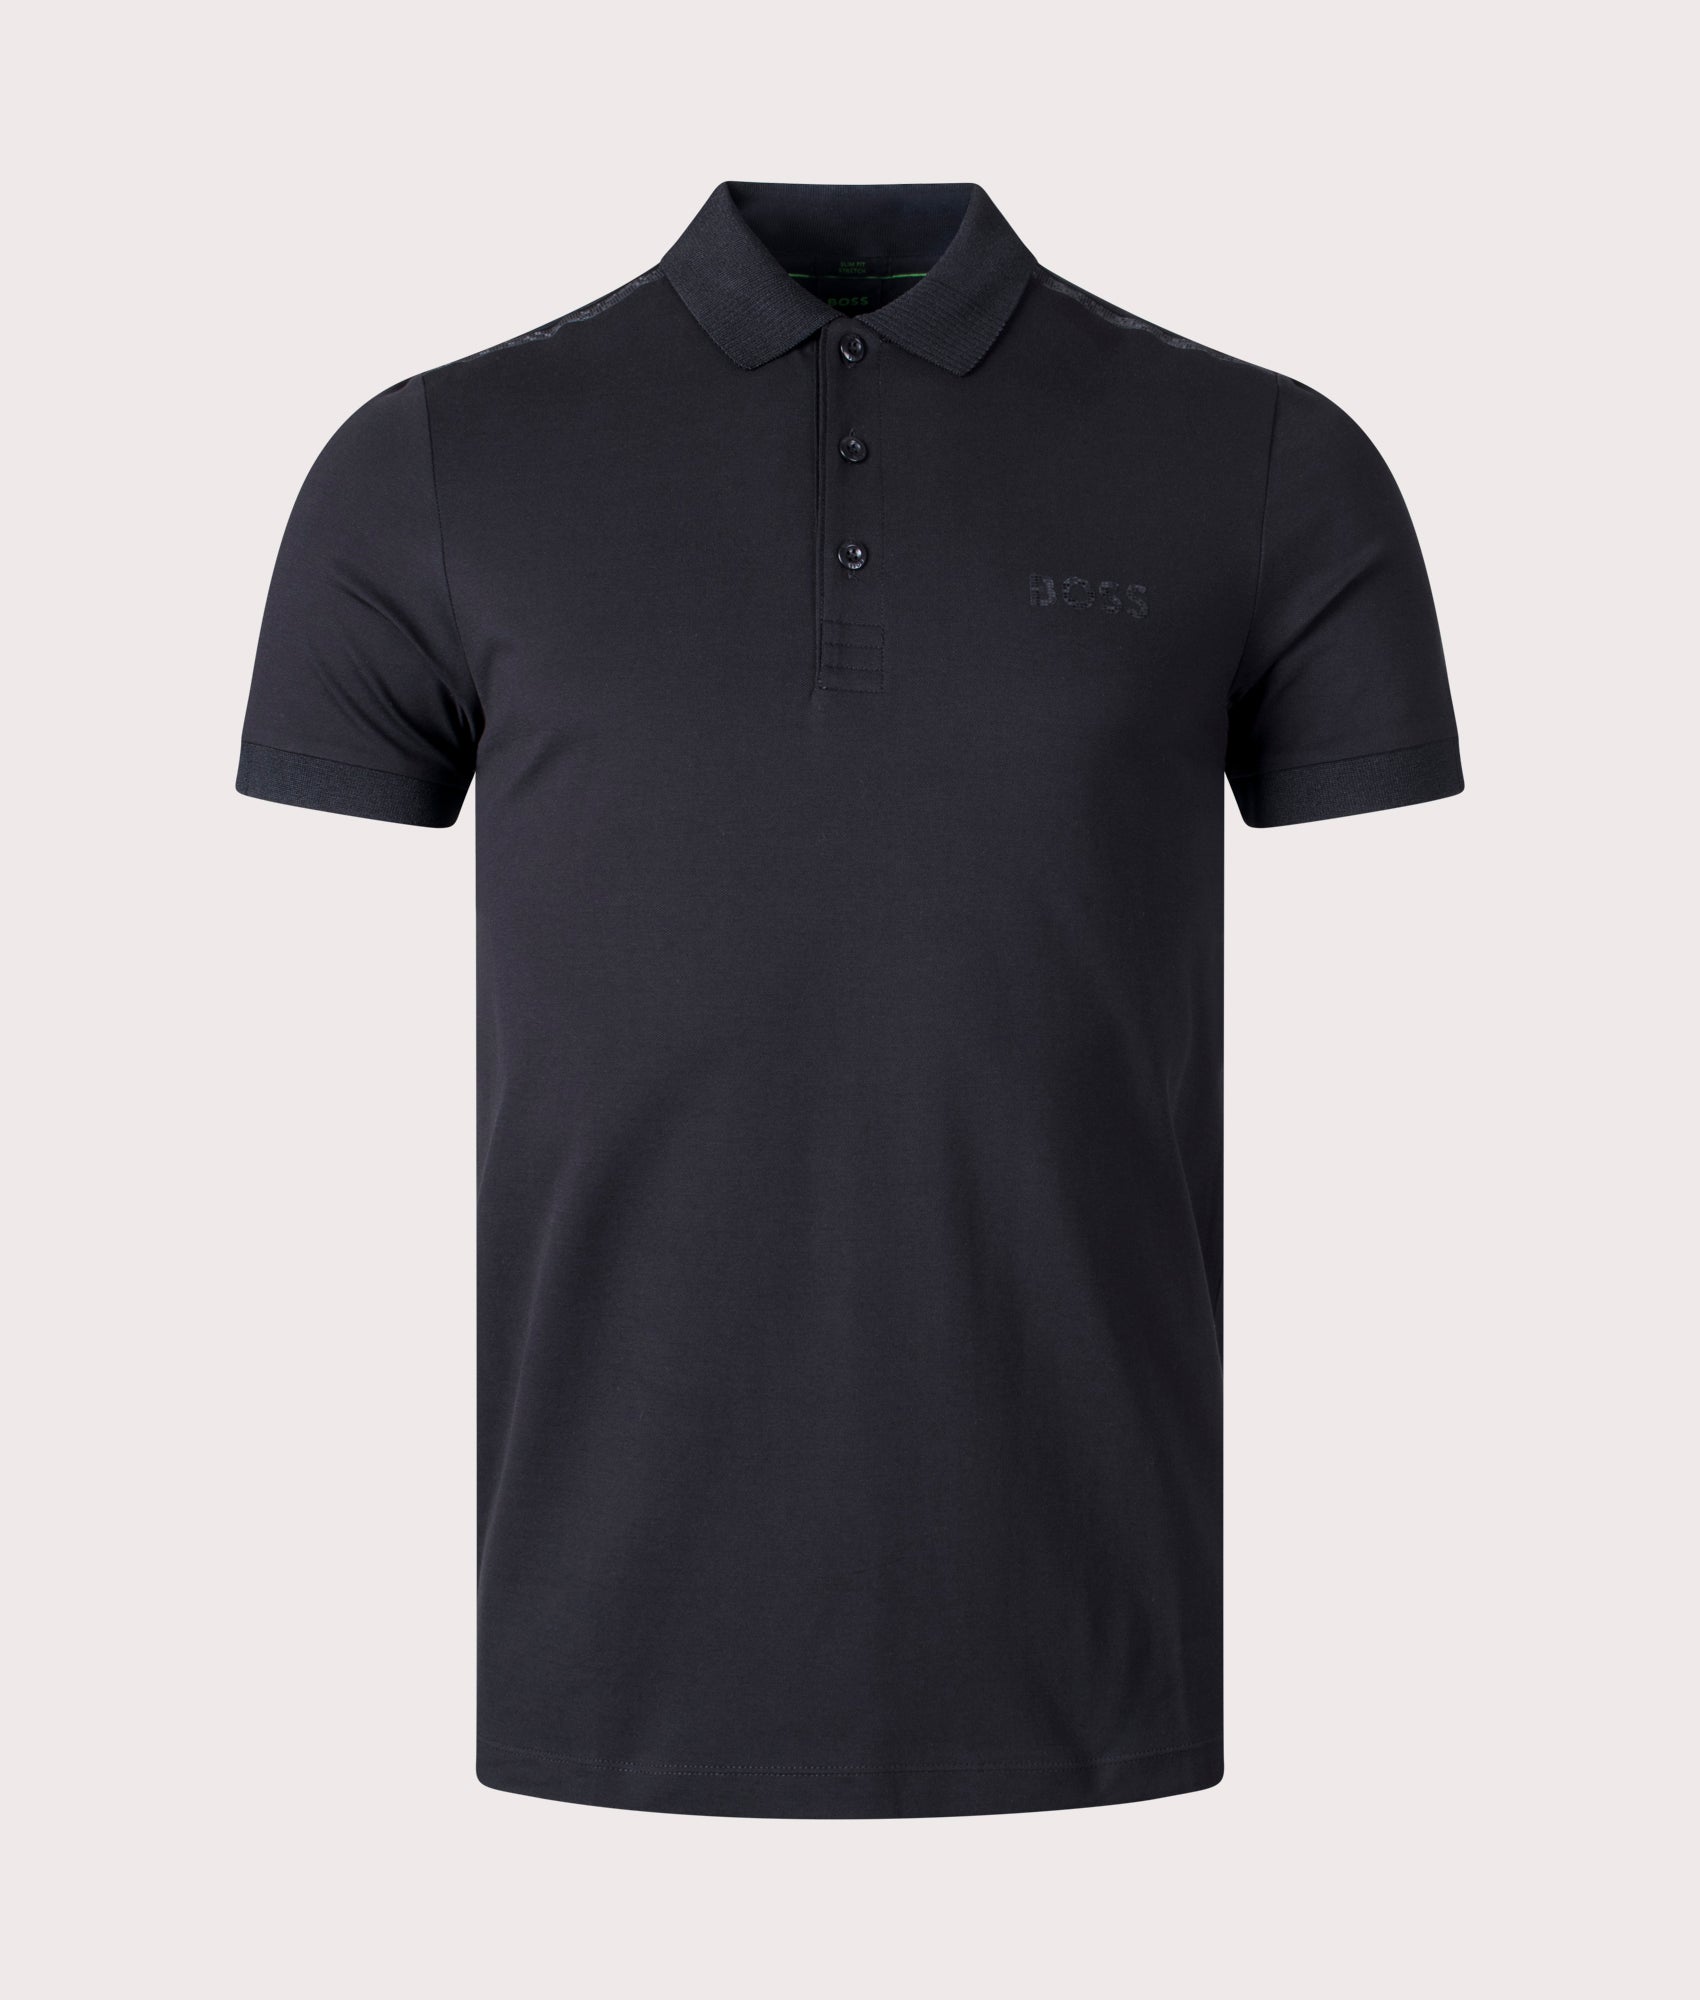 BOSS Mens Slim Fit Paule Mirror Polo Shirt - Colour: 001 Black - Size: Medium